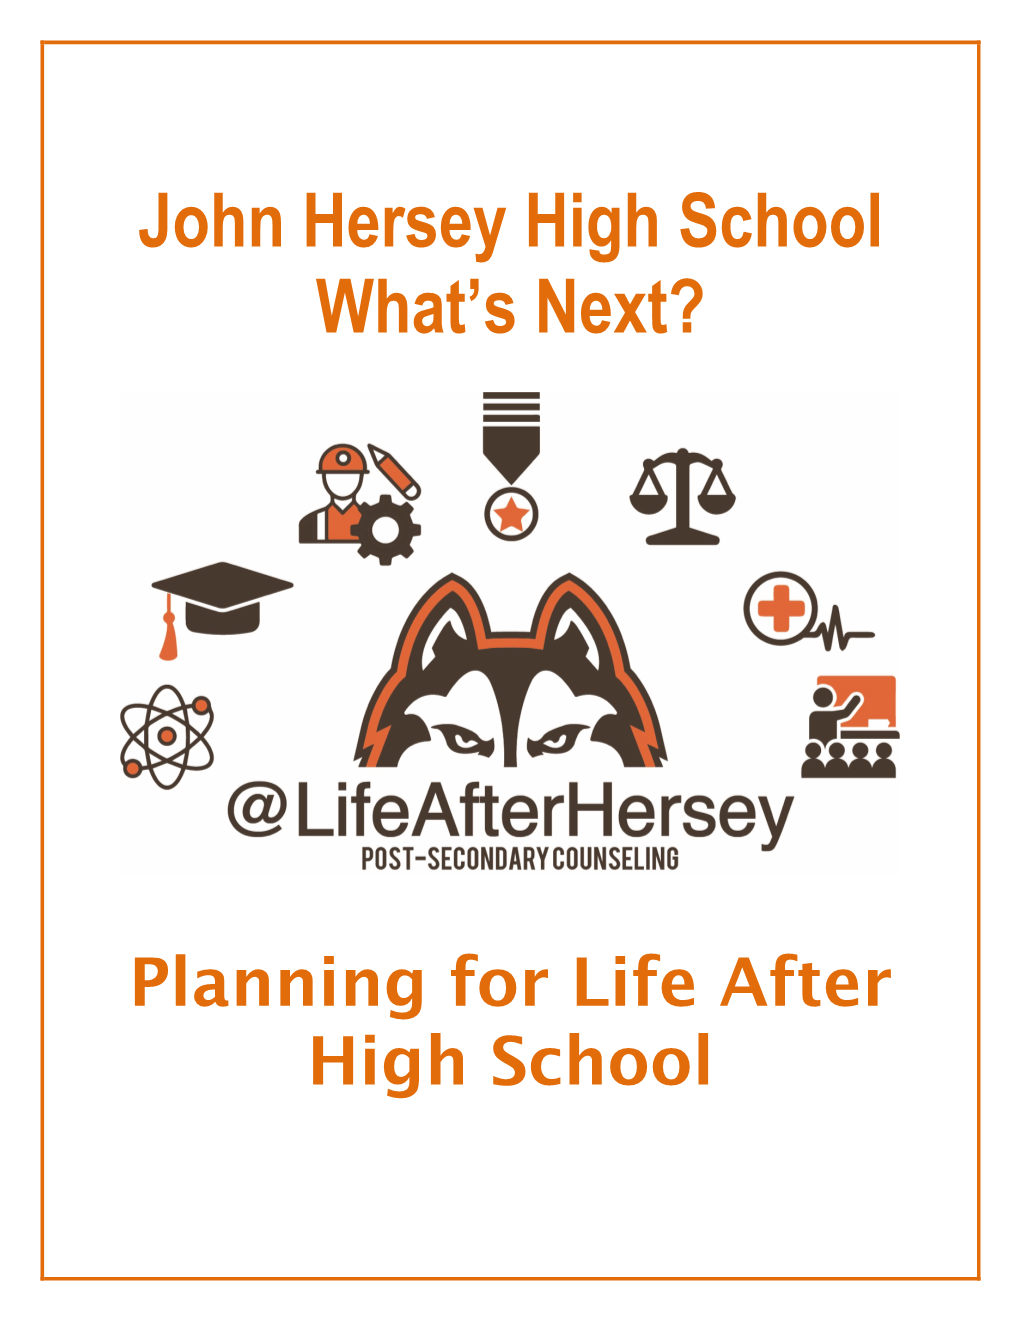 John Hersey High School What's Next?